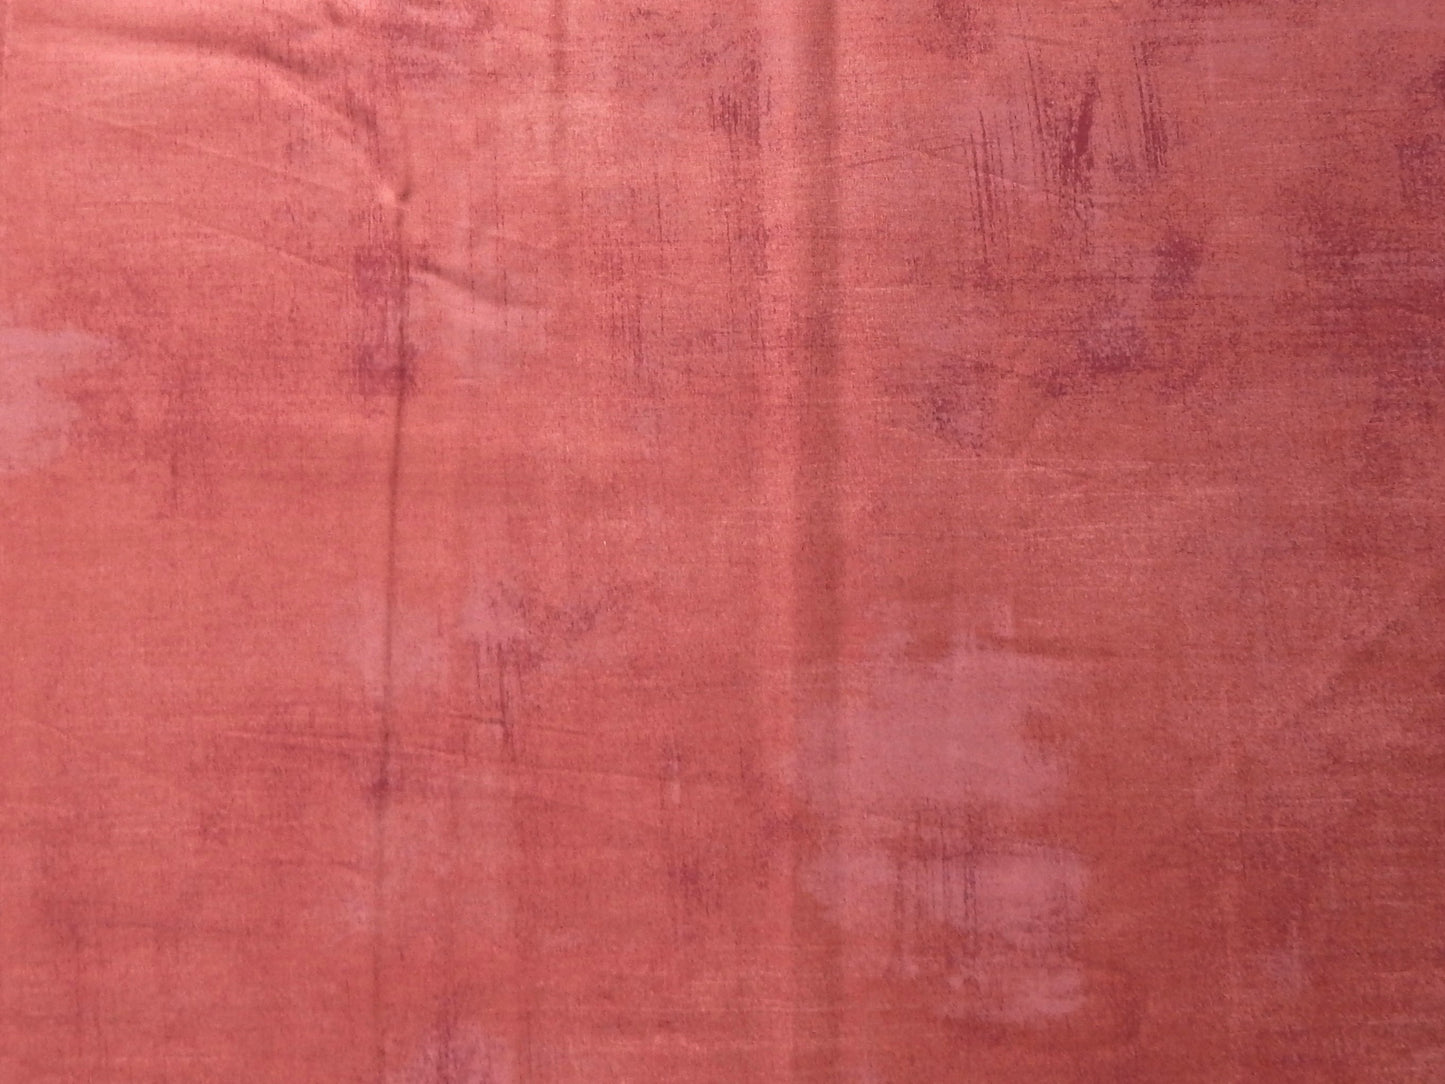 dark pink and maroon fabric